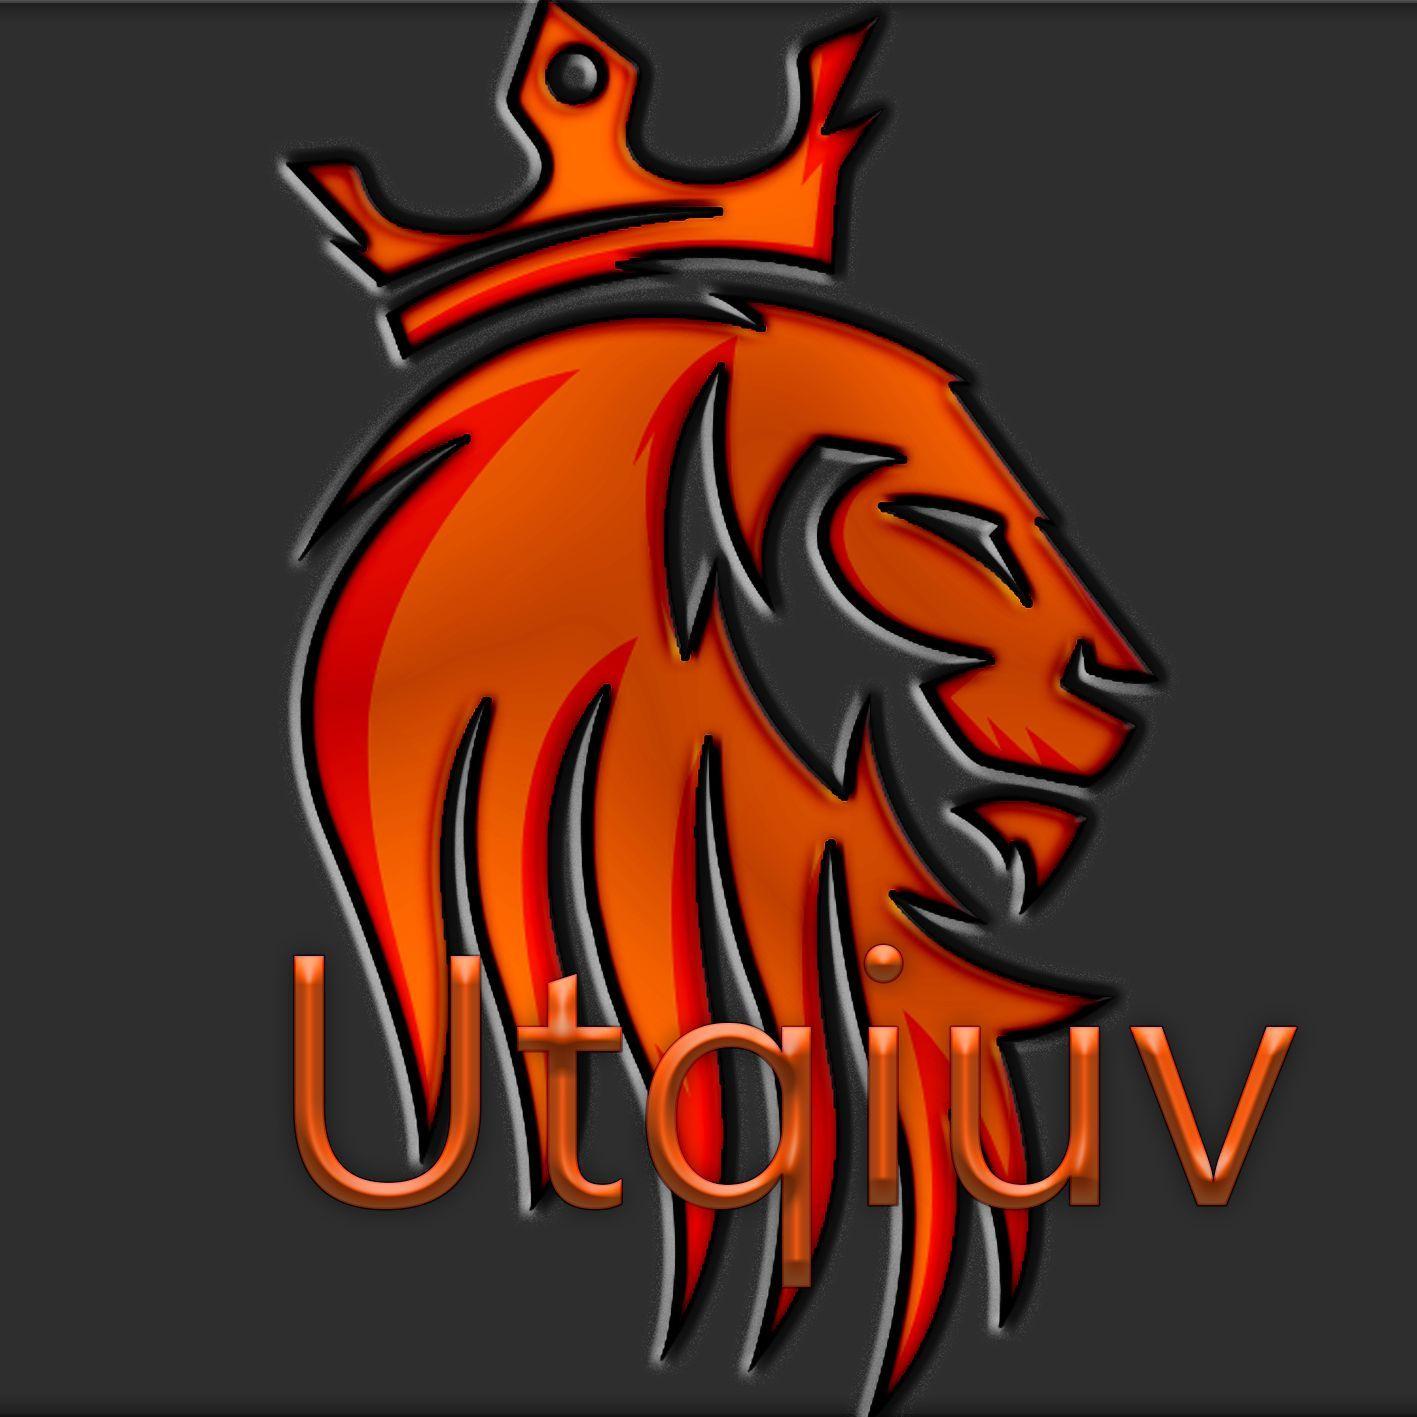 Player utqiuv avatar